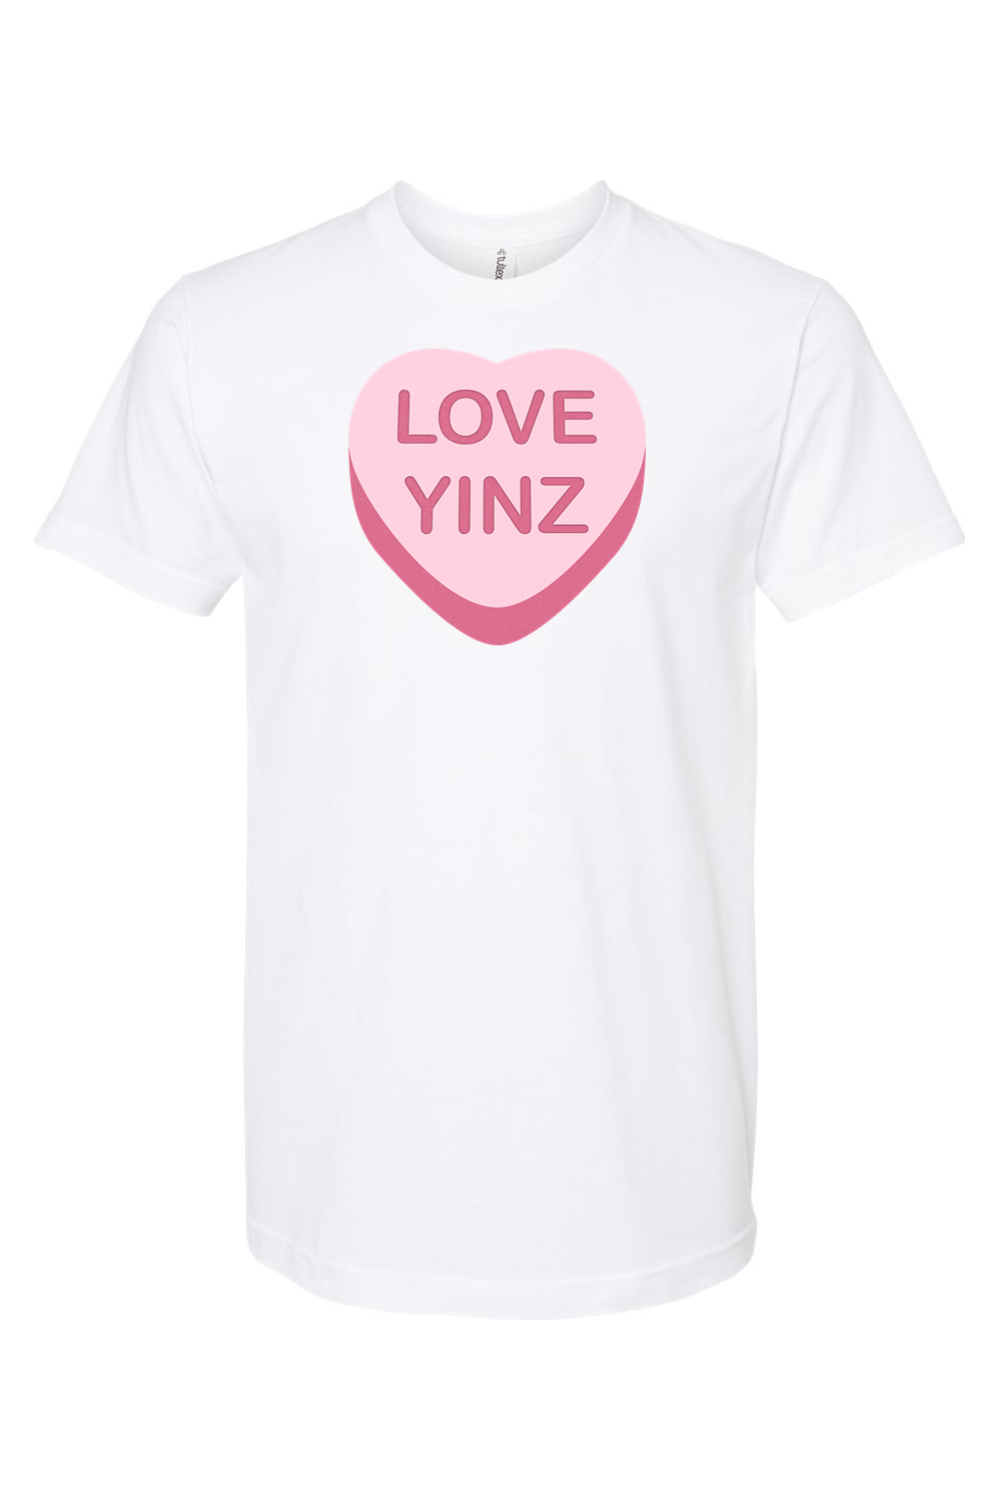 Love Yinz - Conversation Heart - Yinzylvania